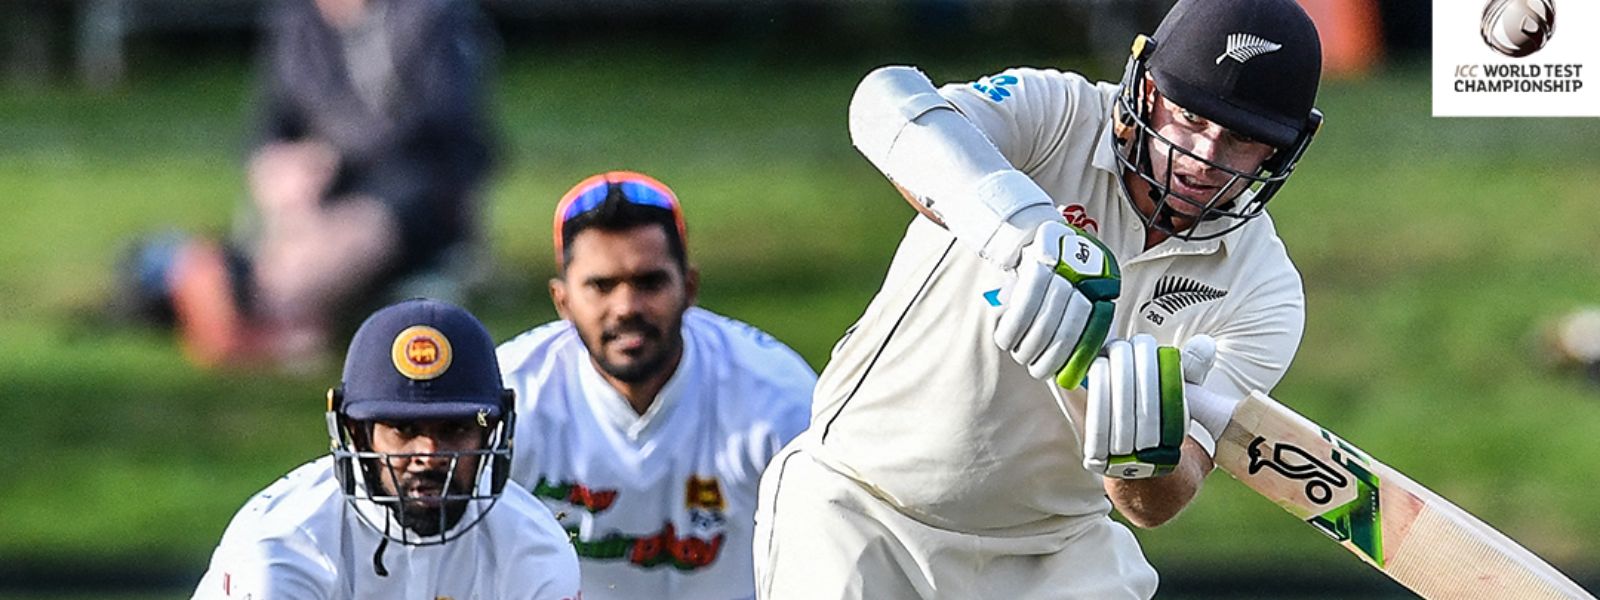 Kane Williamson’s heroic century guided New Zealand to a win against Sri Lanka